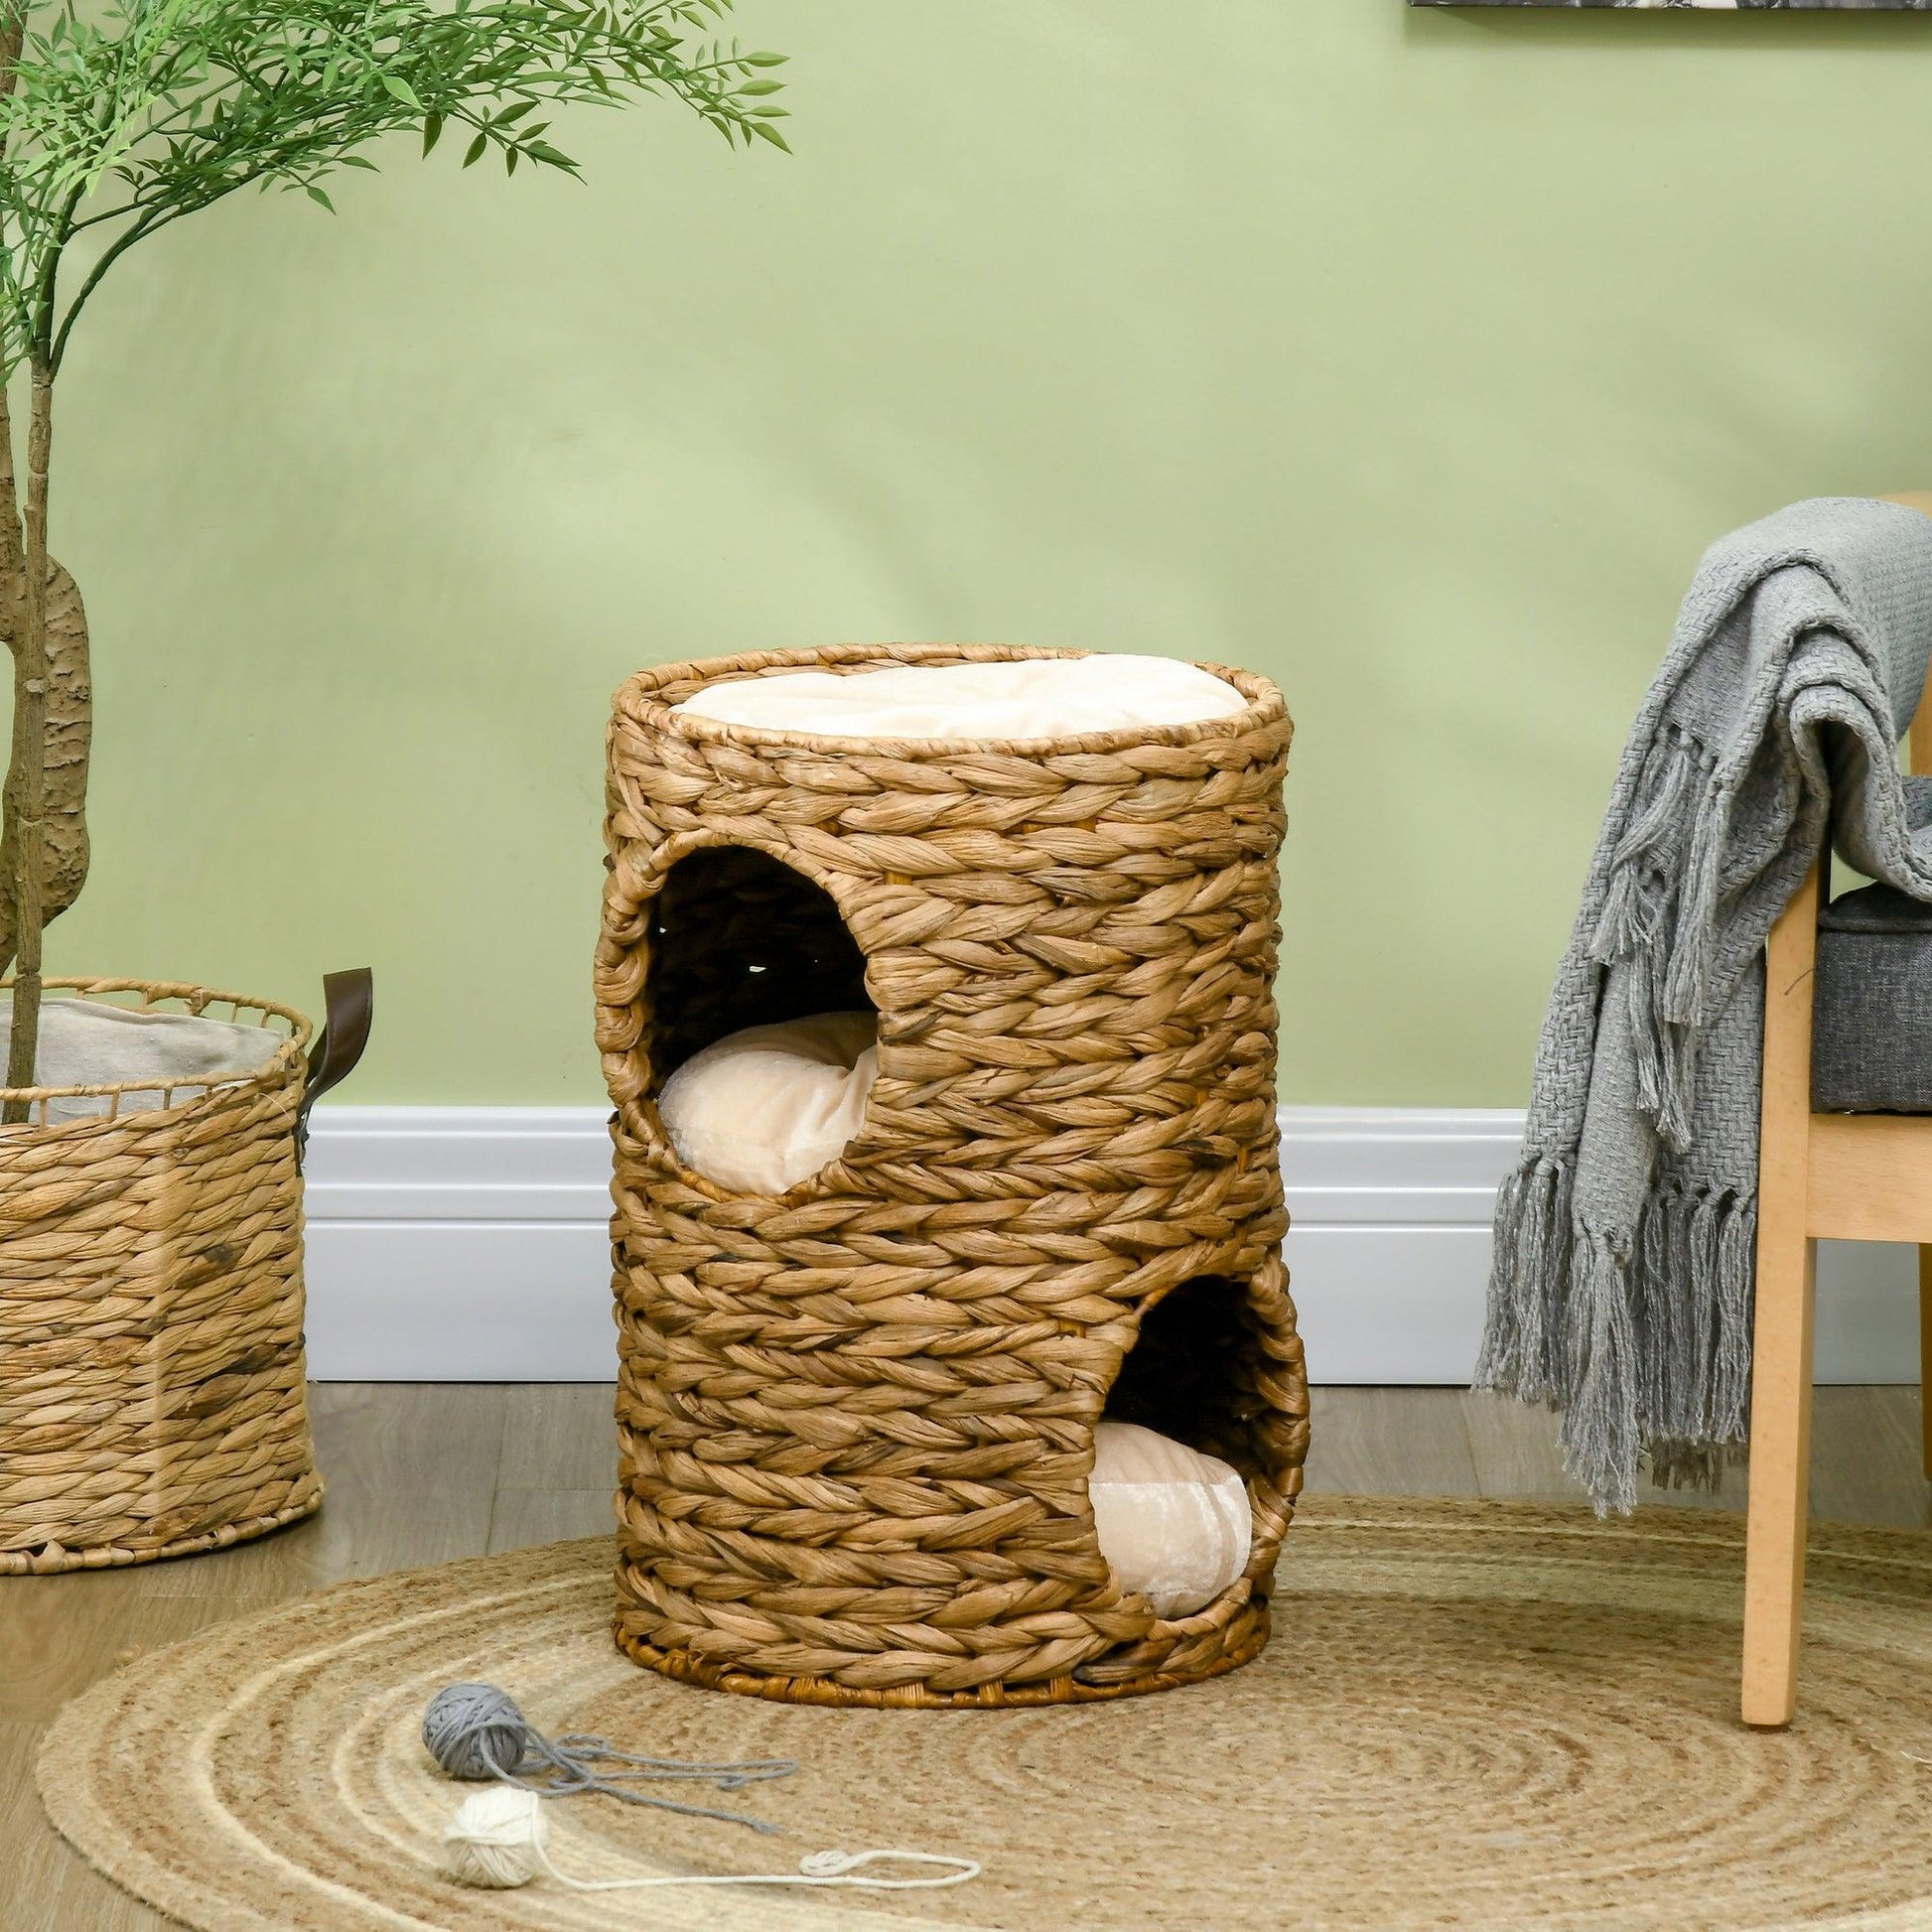 PawHut 47cm Cat Barrel Tree for Indoor Cats w/ Two Cat Houses, Cushion - ALL4U RETAILER LTD